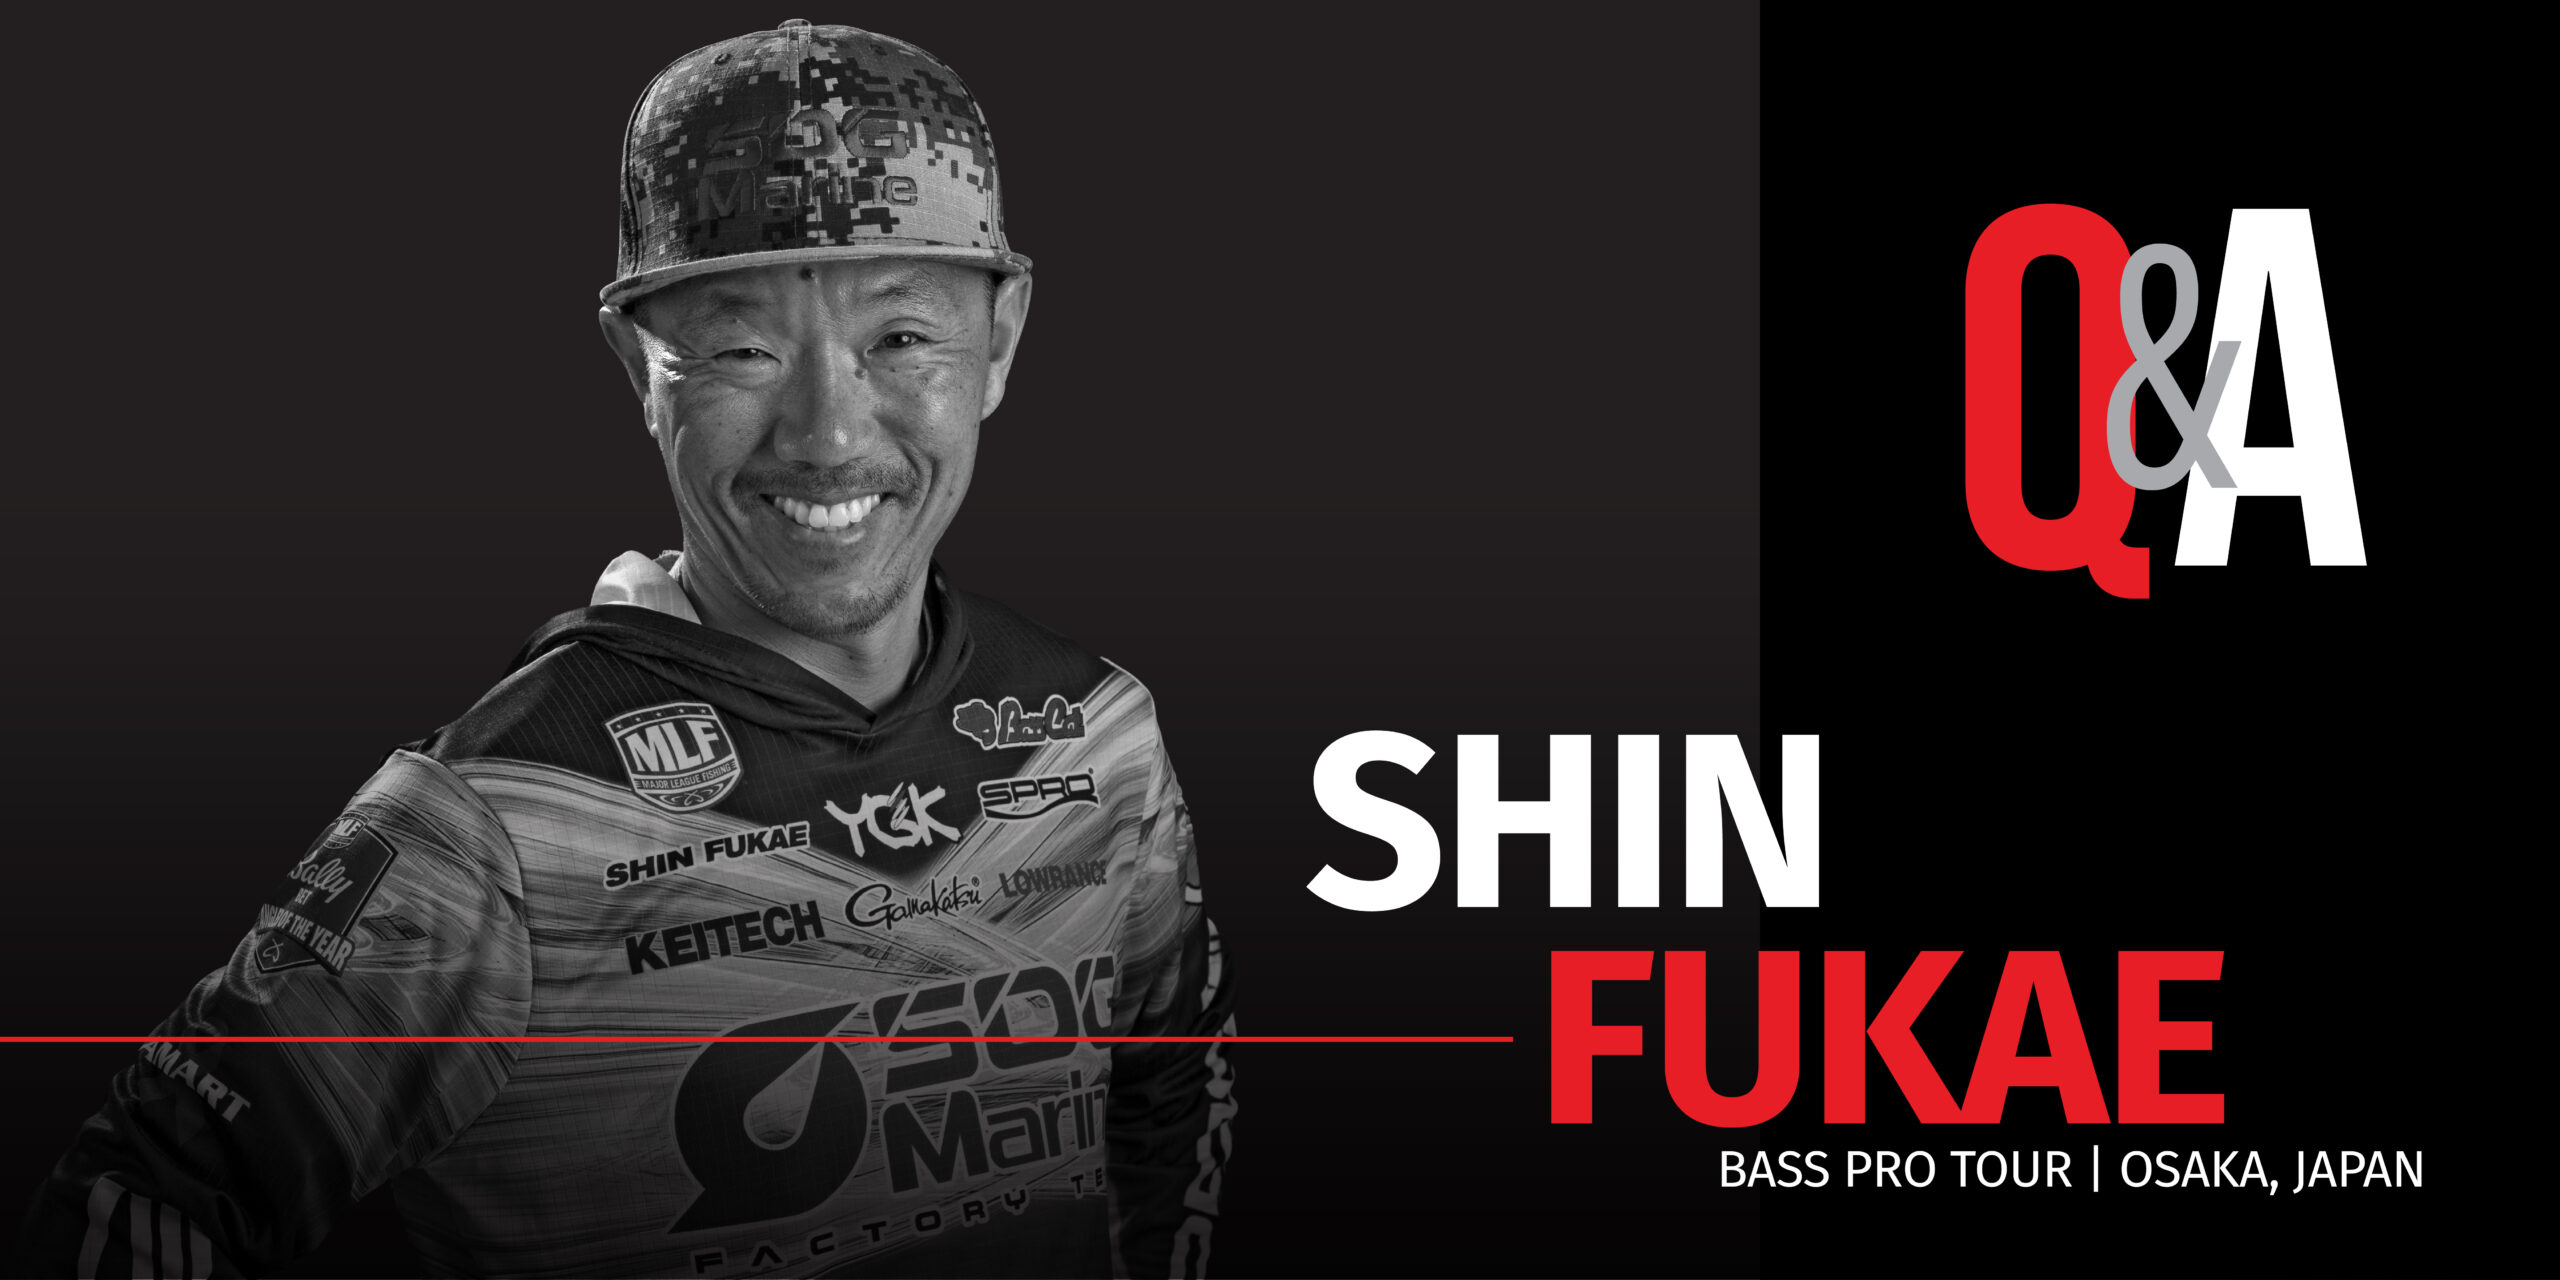 Q&A with Shin Fukae: His bass fishing history, life on the road